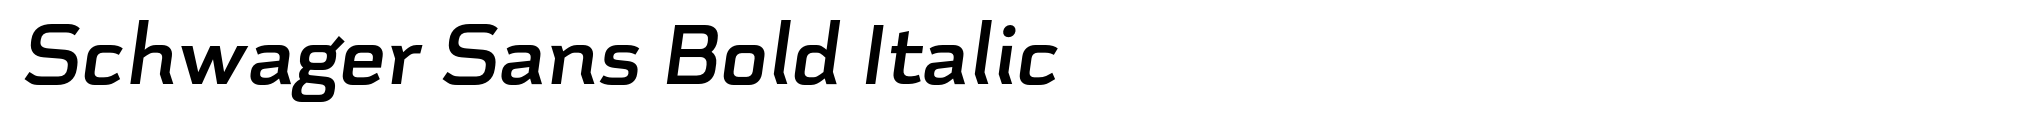 Schwager Sans Bold Italic image